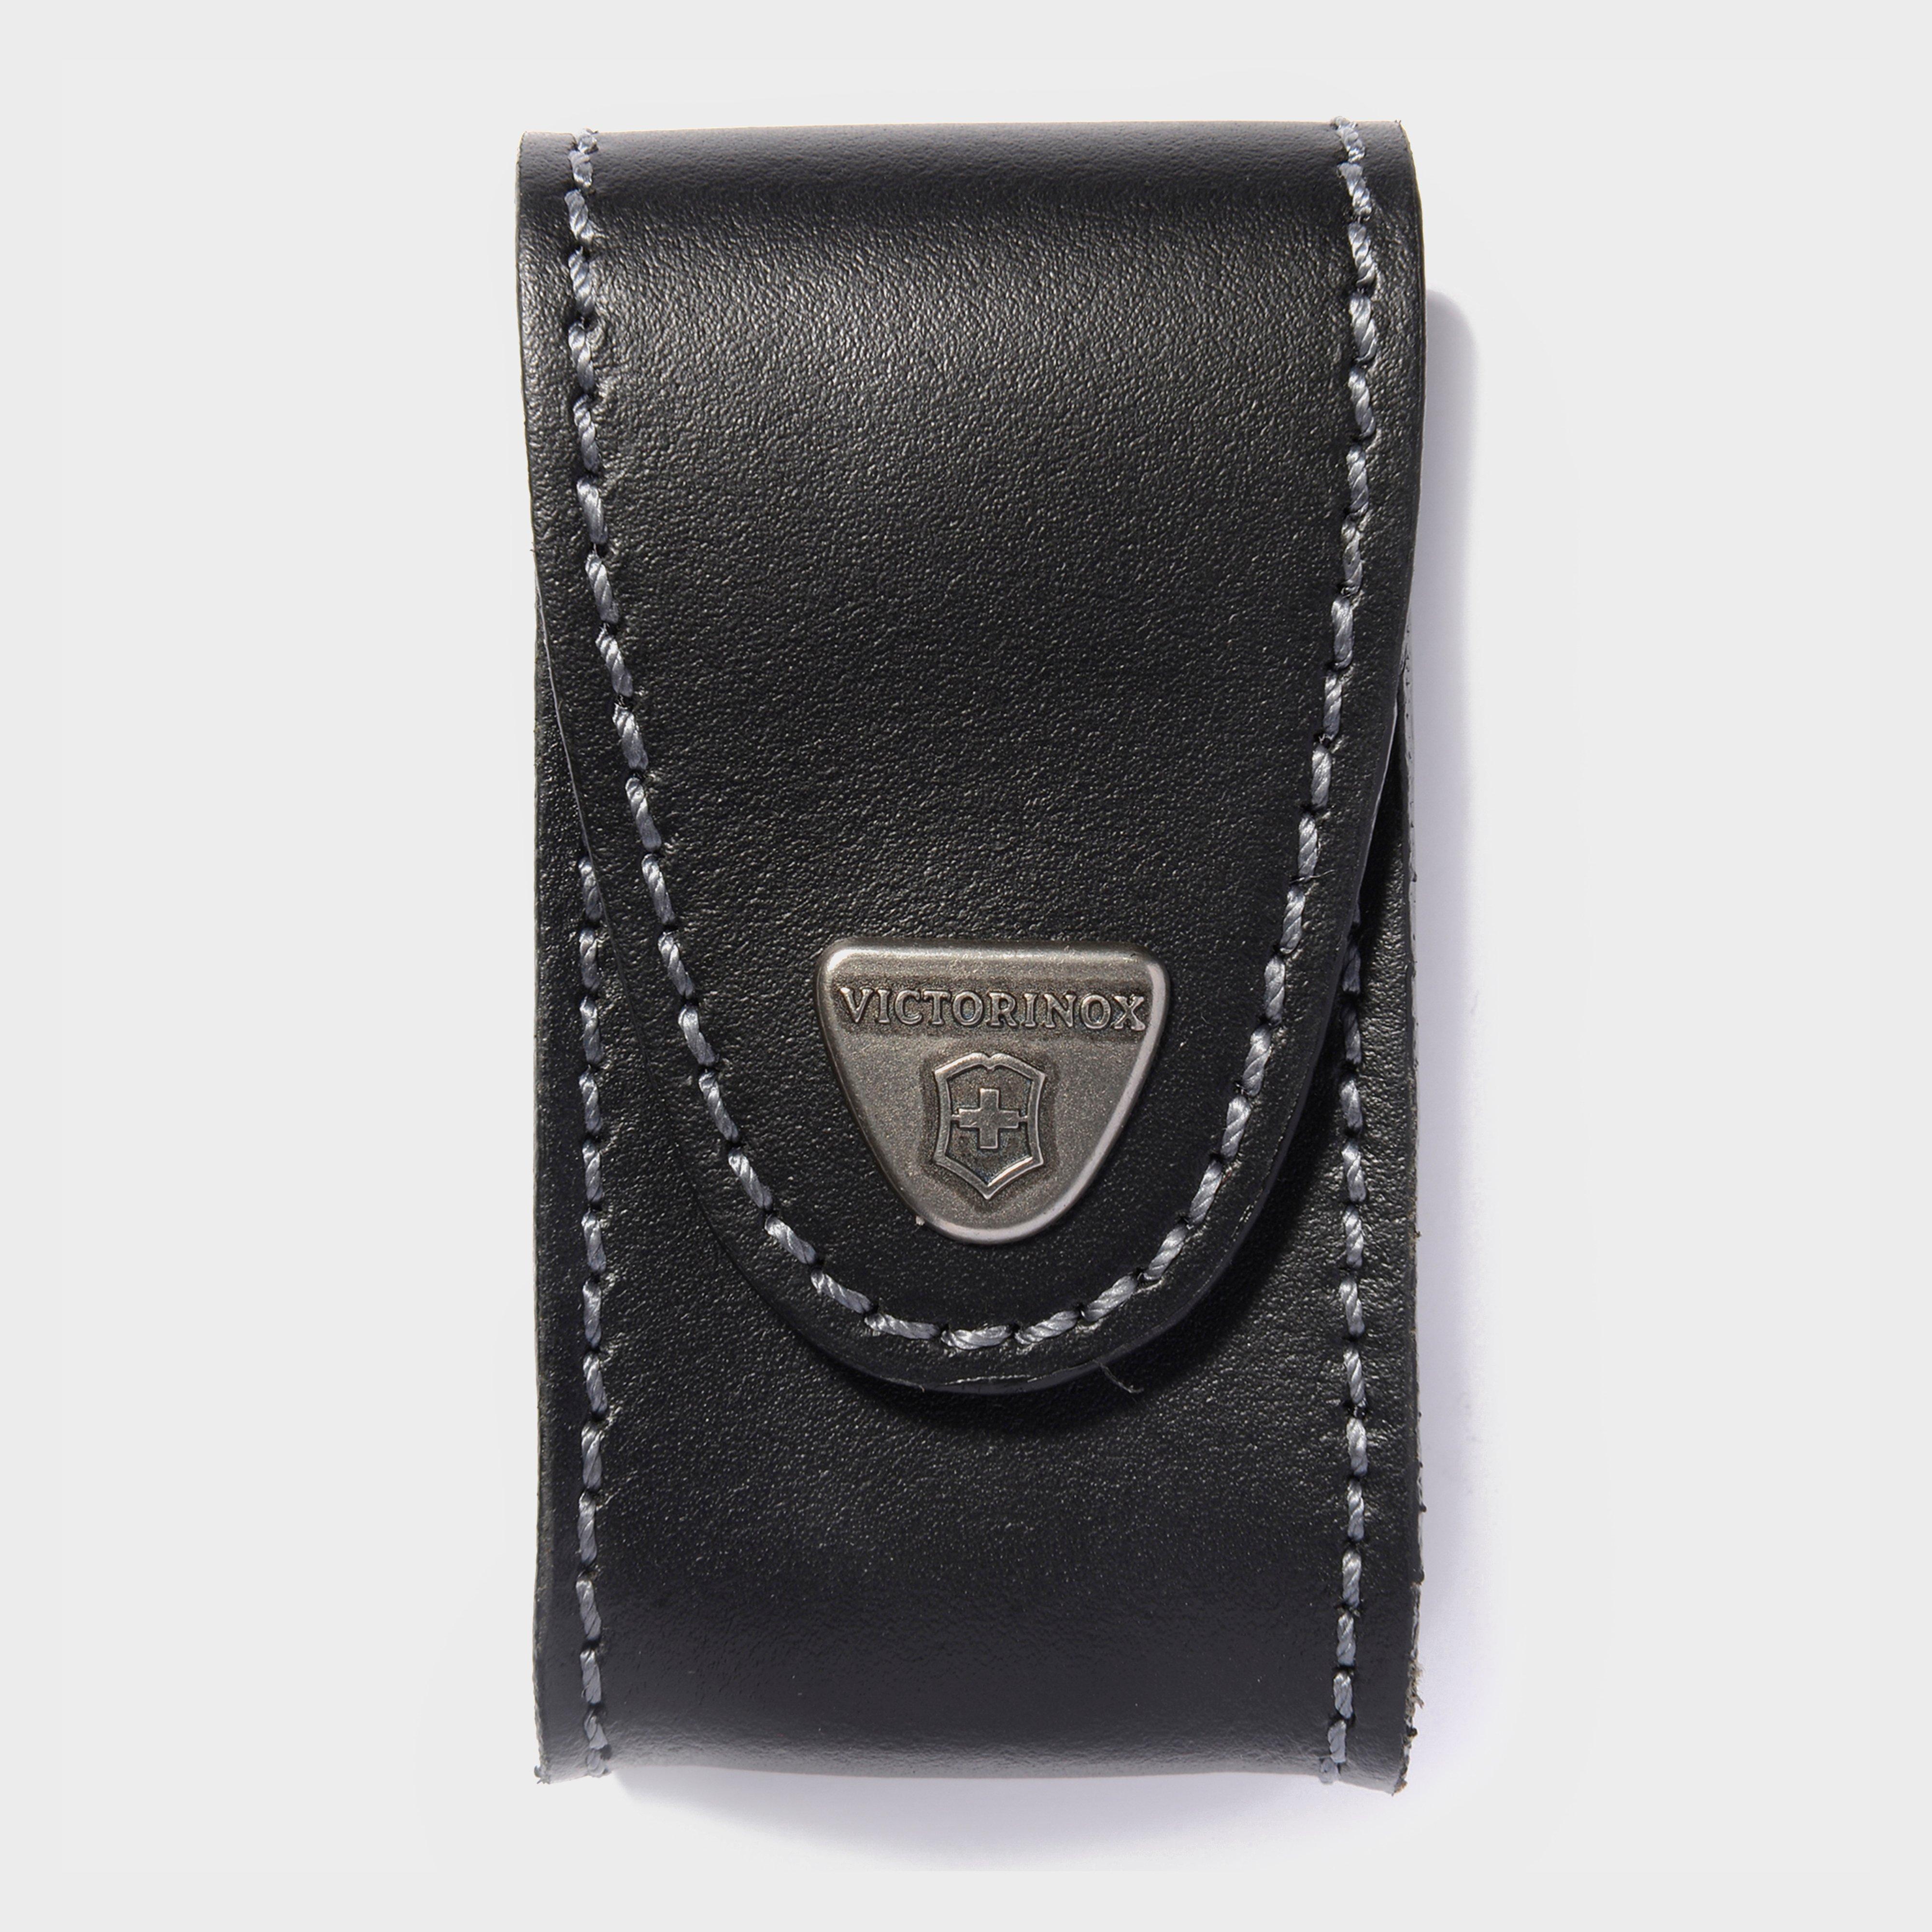 Victorinox Pocket Knife Leather Belt Pouch 5-8 Layers - Black/blk  Black/blk